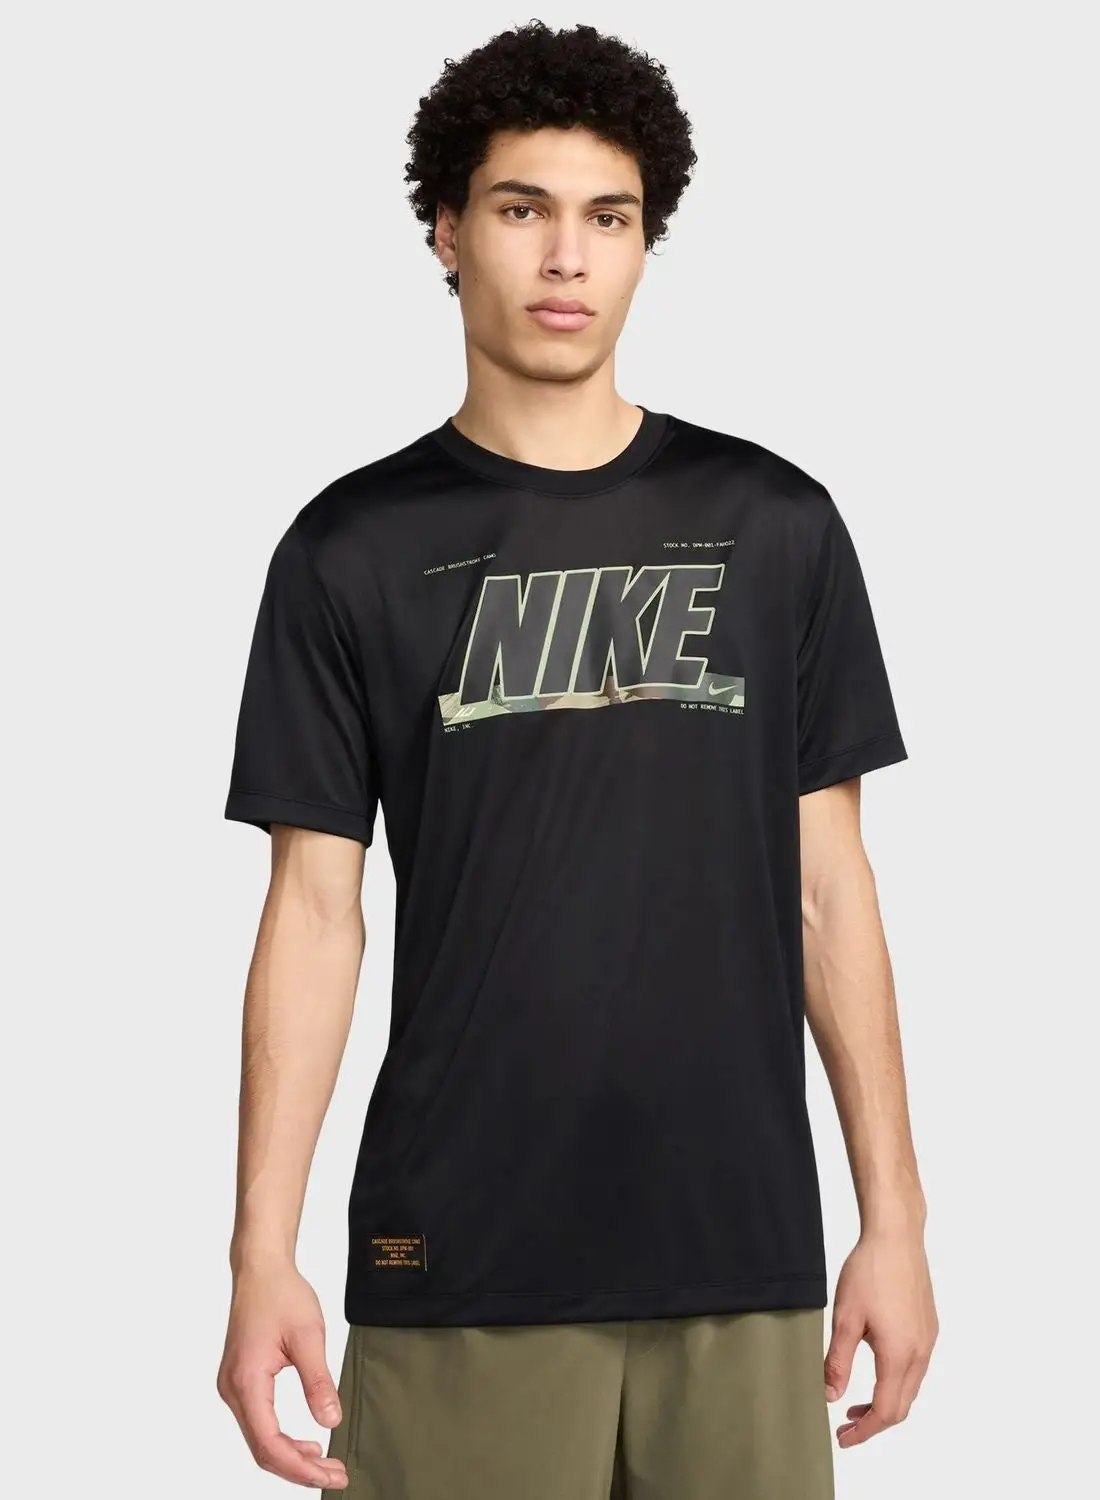 Nike Dri-Fit Camo Graphic T-Shirt